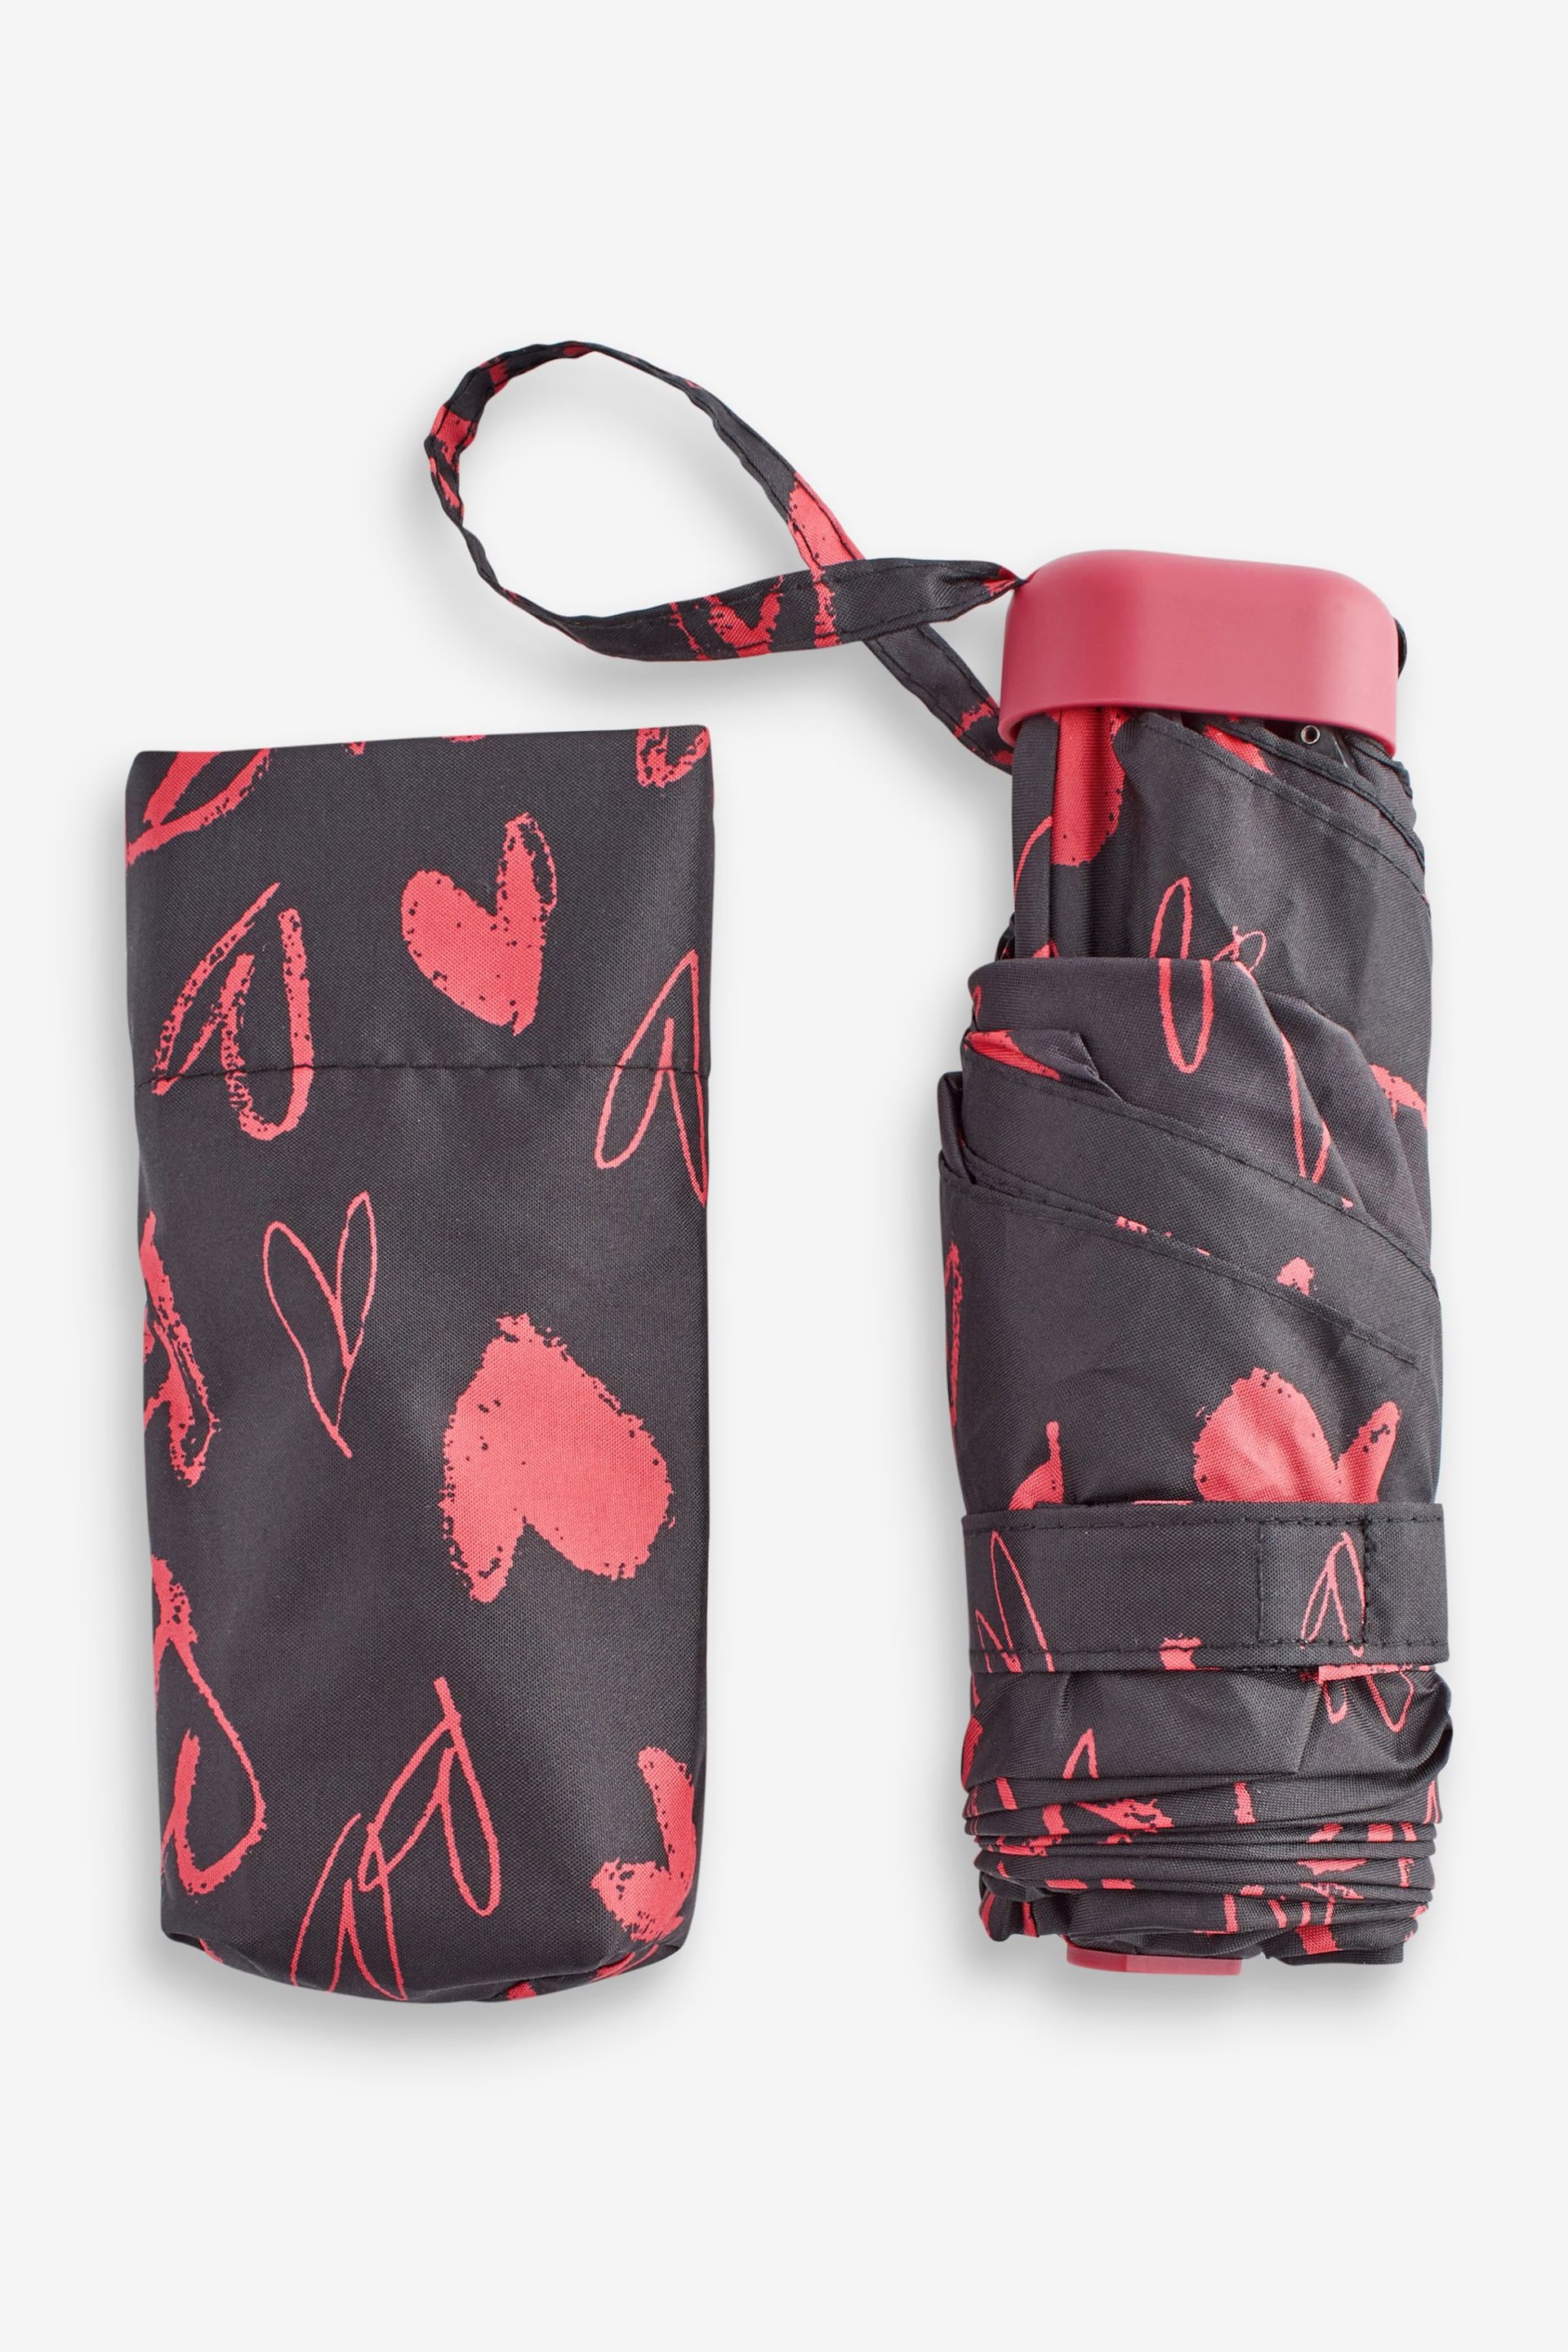 Black/Red Compact Umbrella - Image 3 of 3